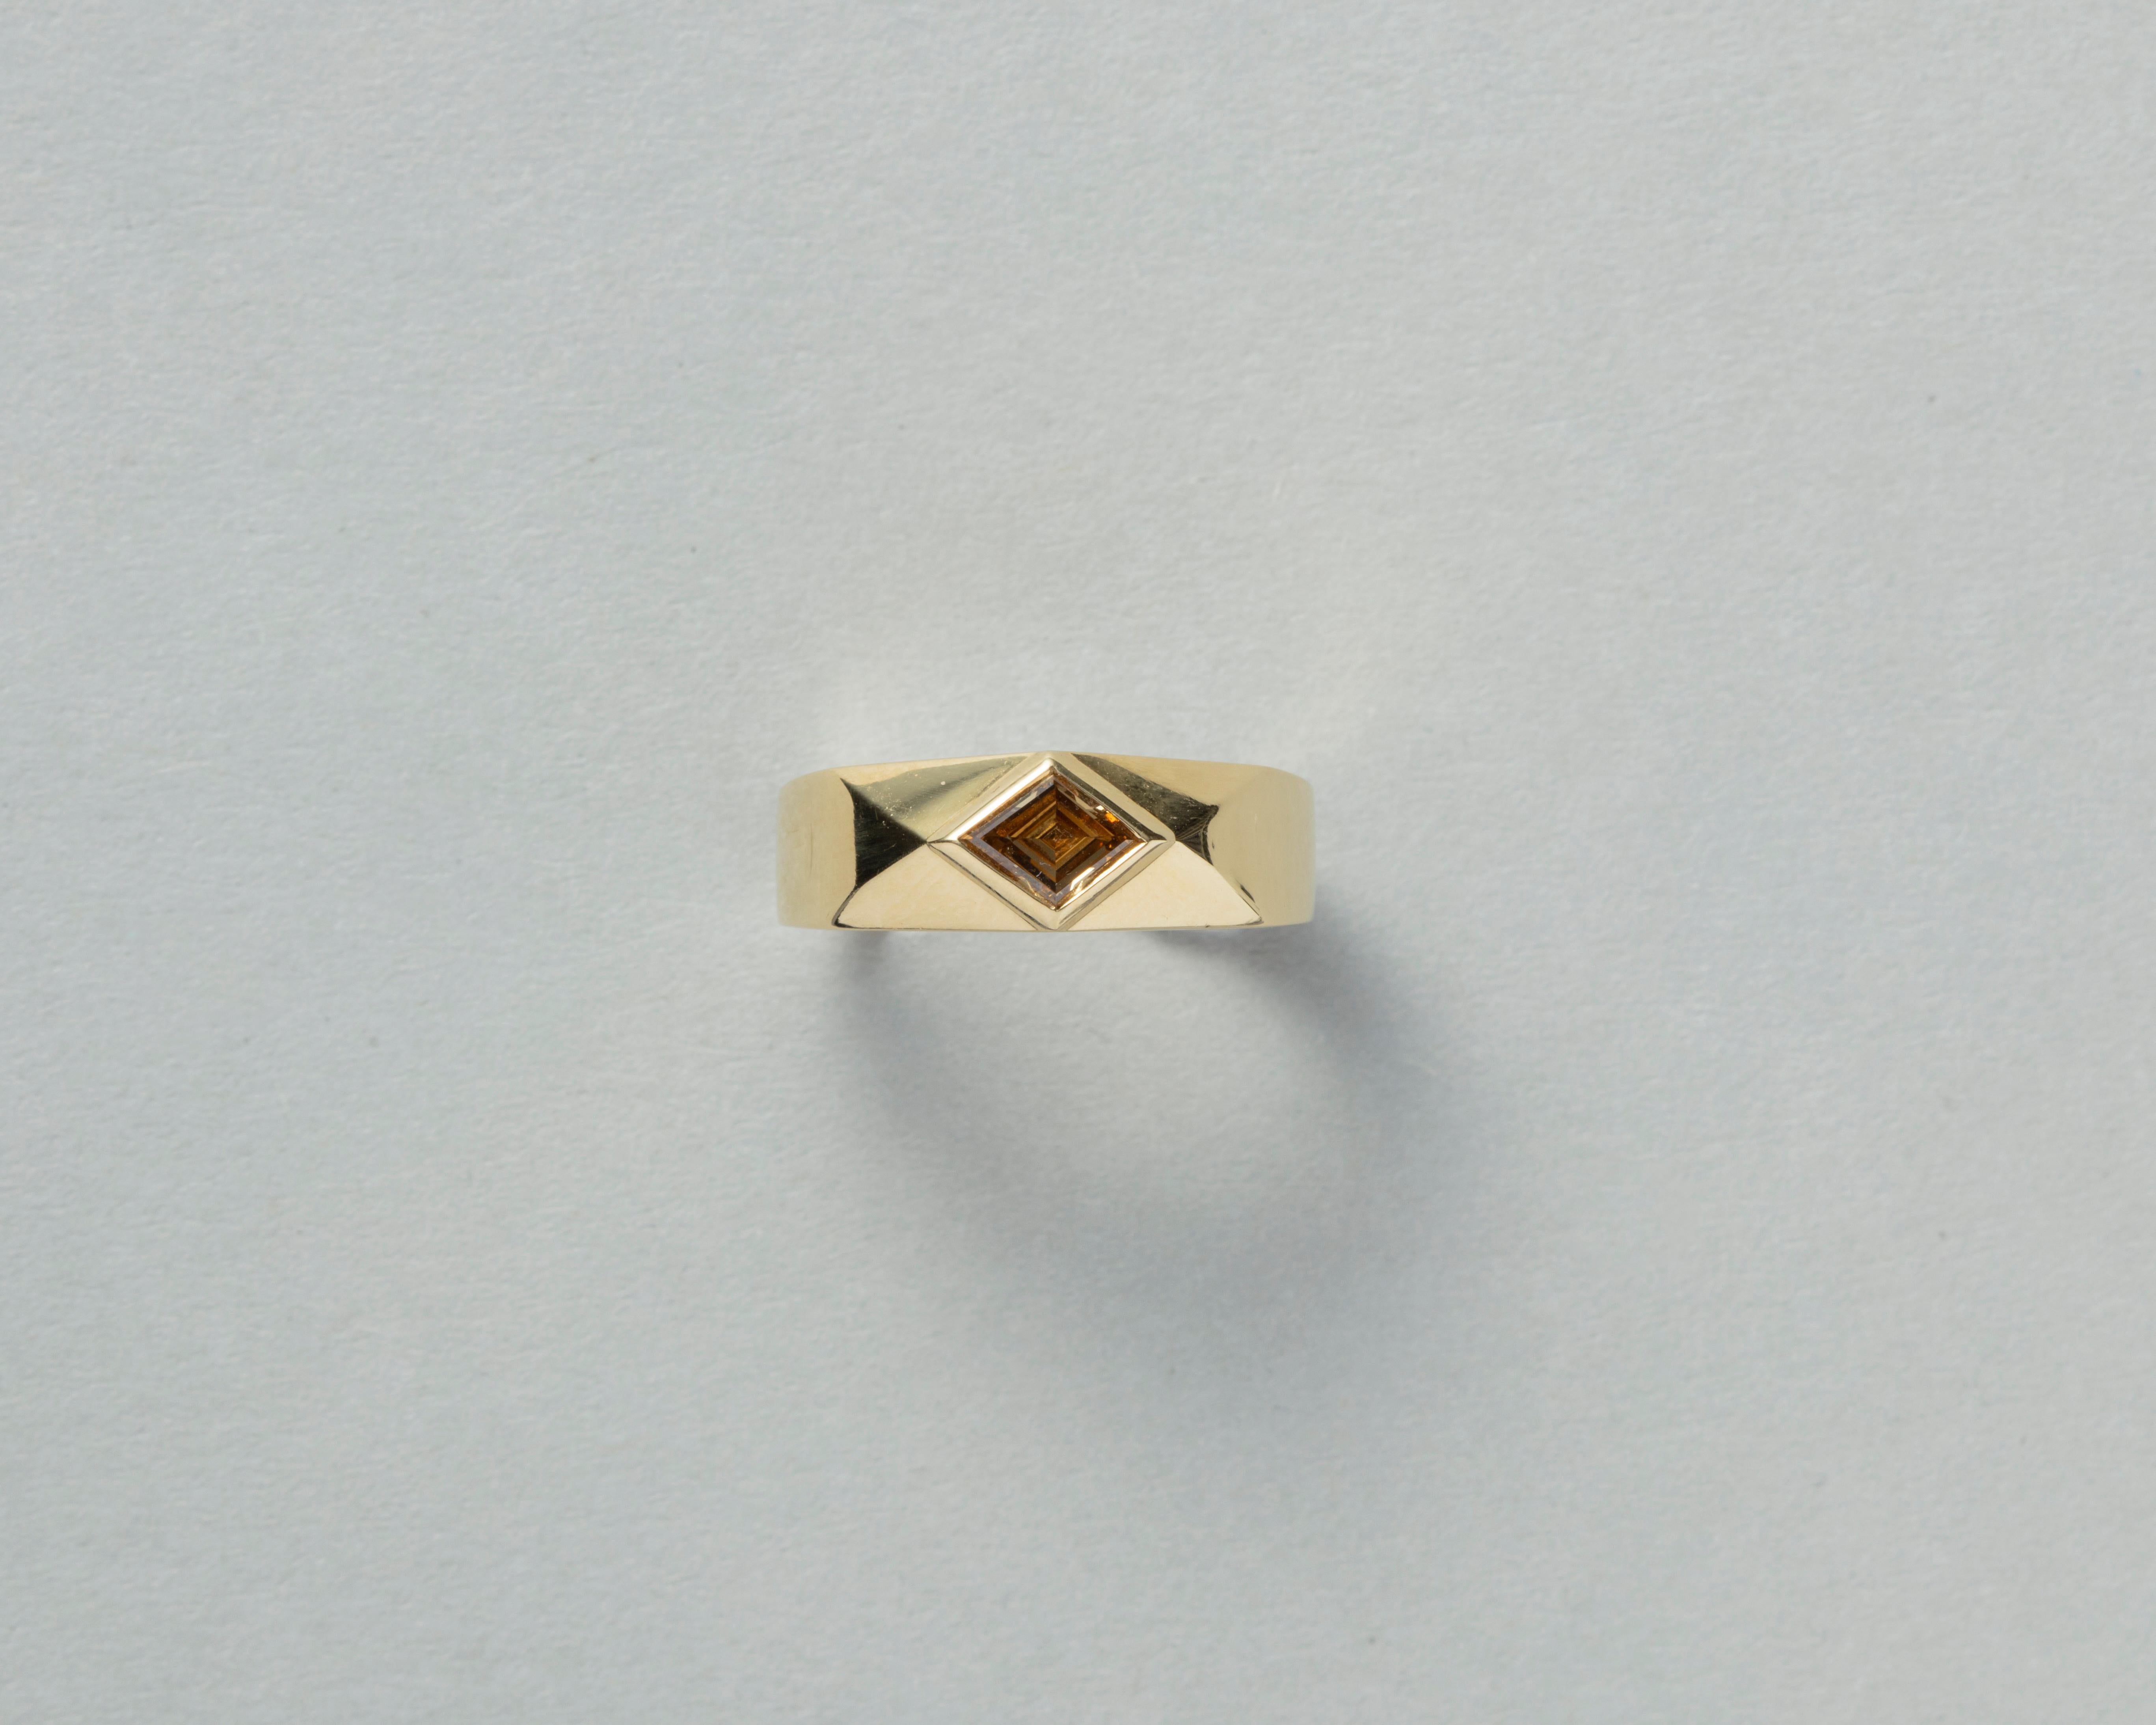 18 Carat Gold Ring Bezel Set with a Brown Kite Shape Diamond 2